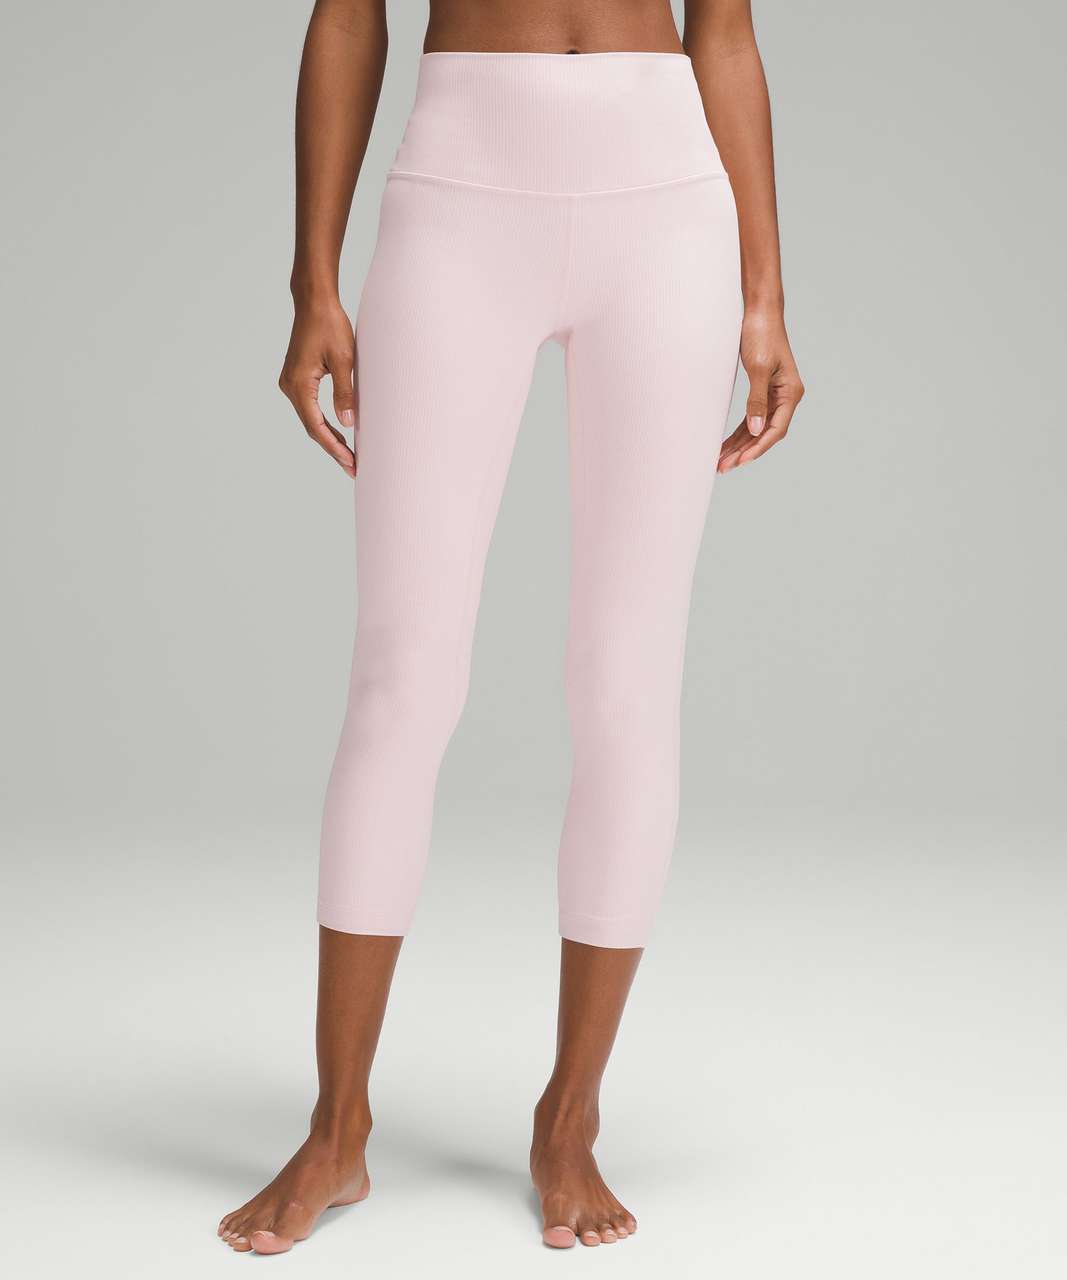 Lululemon Pink Align legging size 4